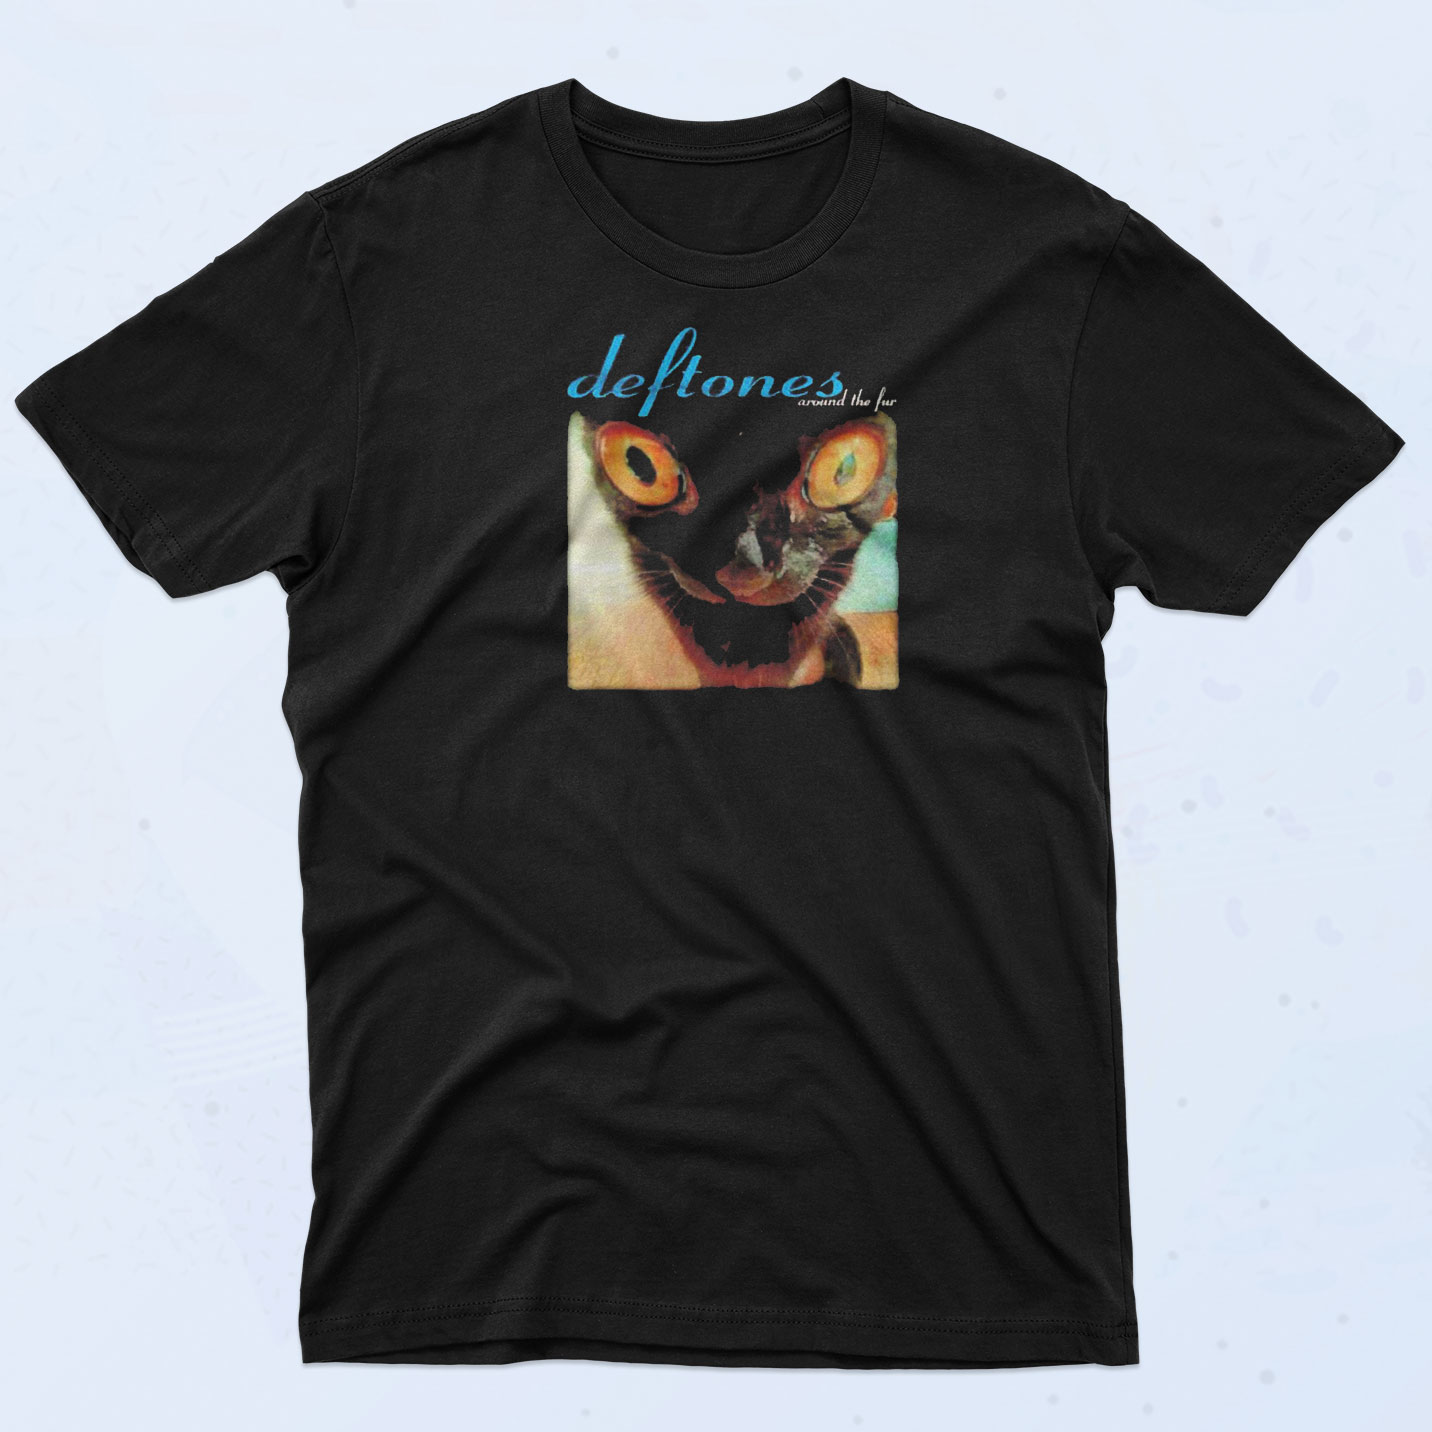 Deftones Around The Fur Cat T Shirt - 90sclothes.com